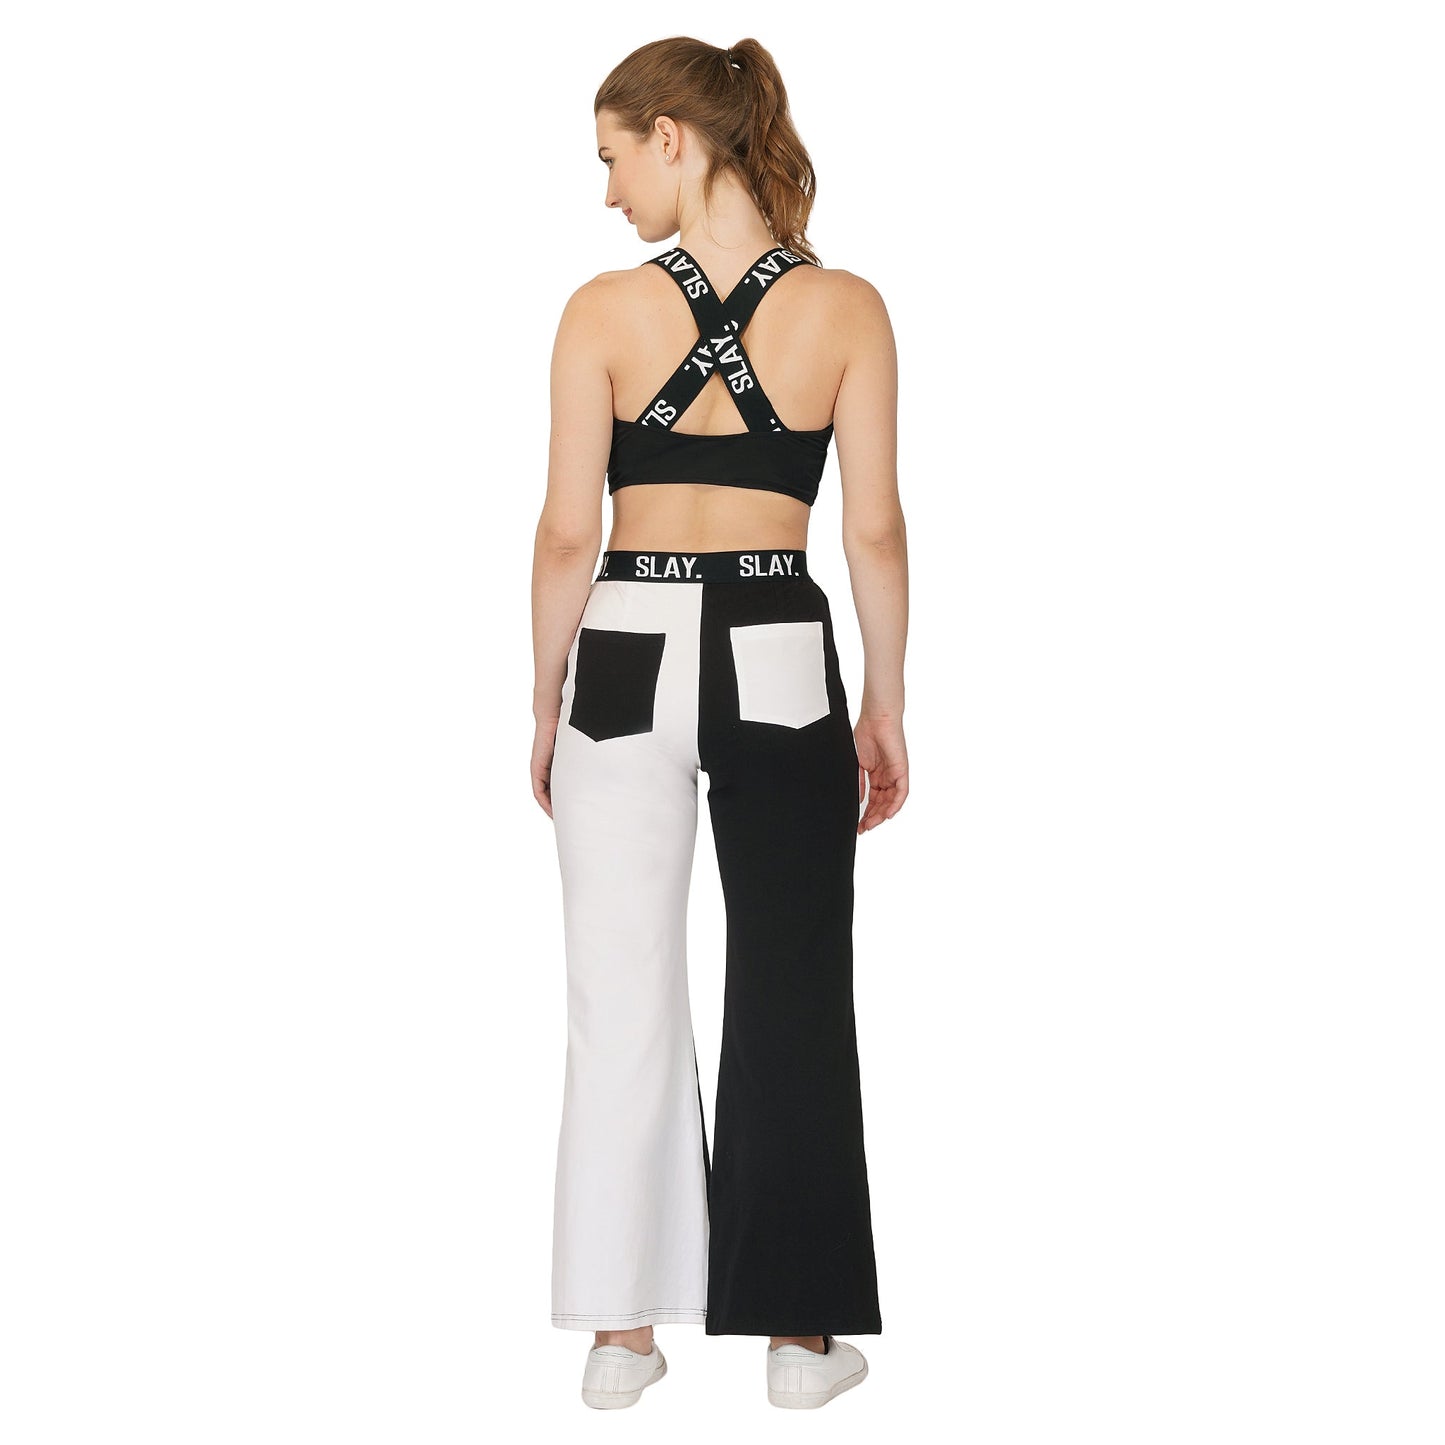 SLAY. Sport Women's Black White Colorblock Crop Top & Pants Co-ord Set